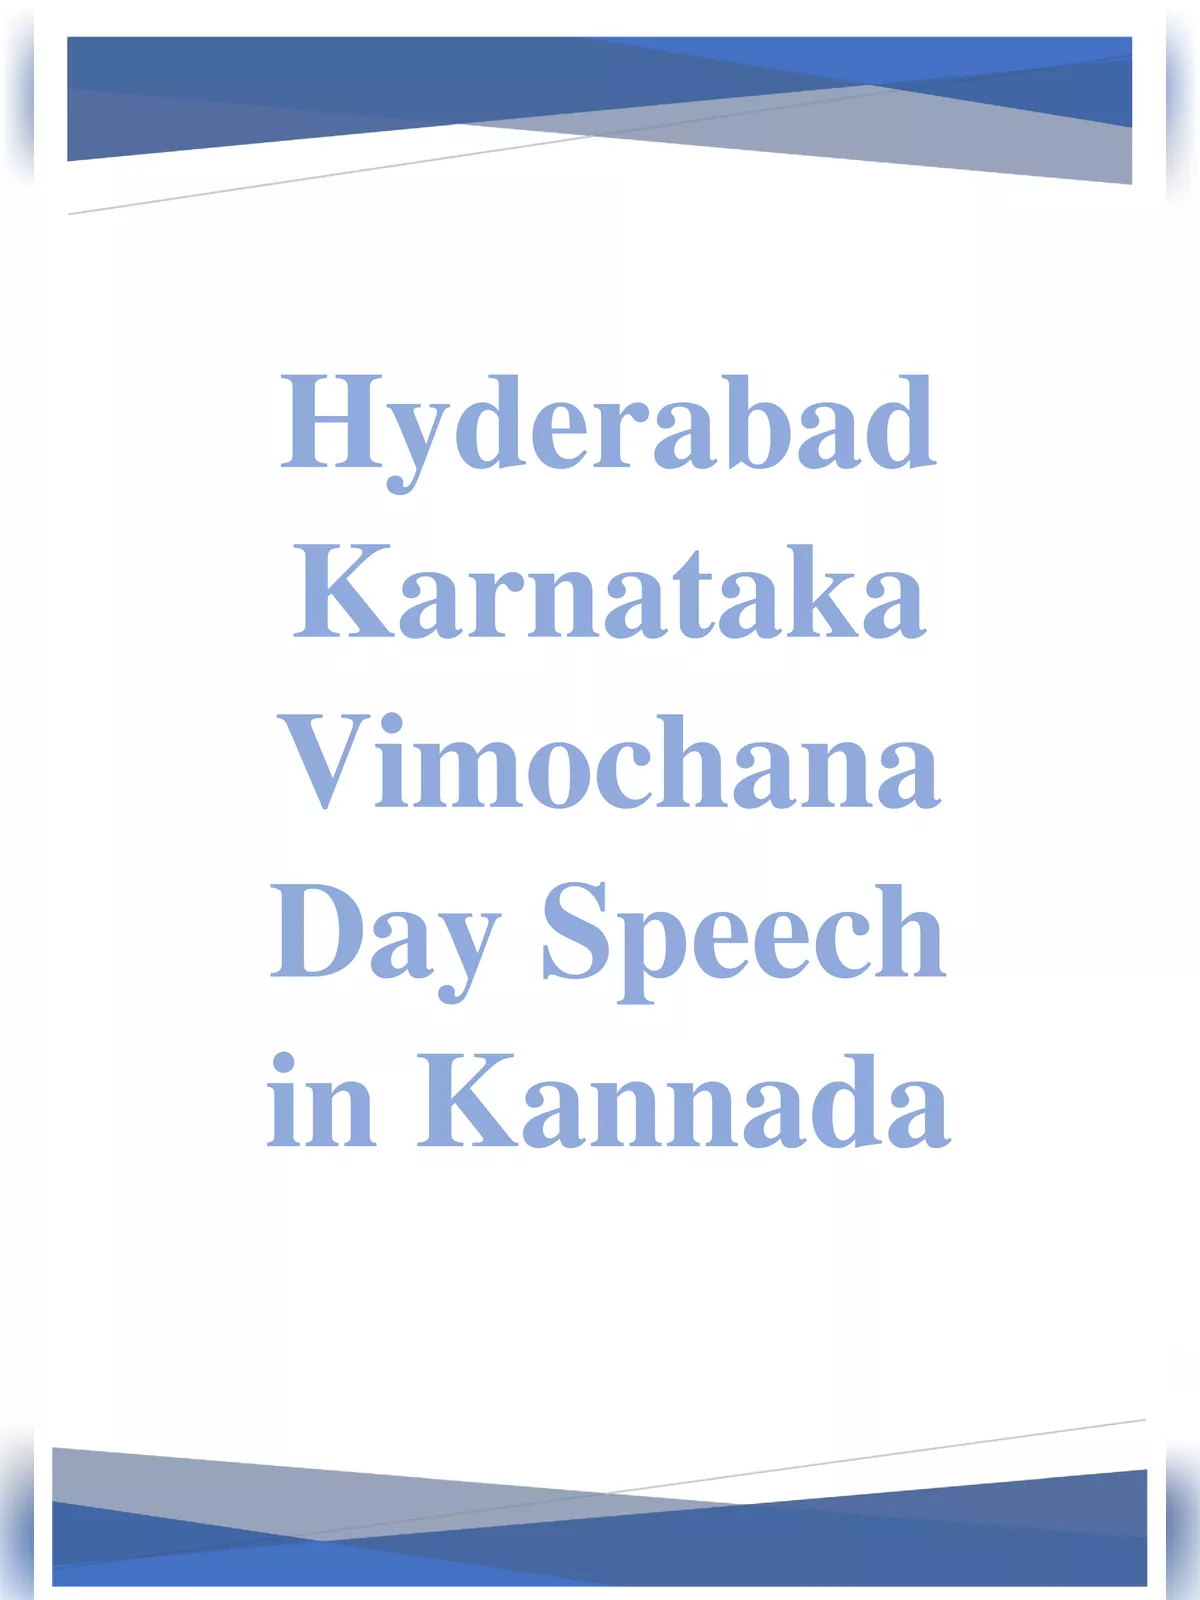 Hyderabad Karnataka Vimochana Day Speech Kannada